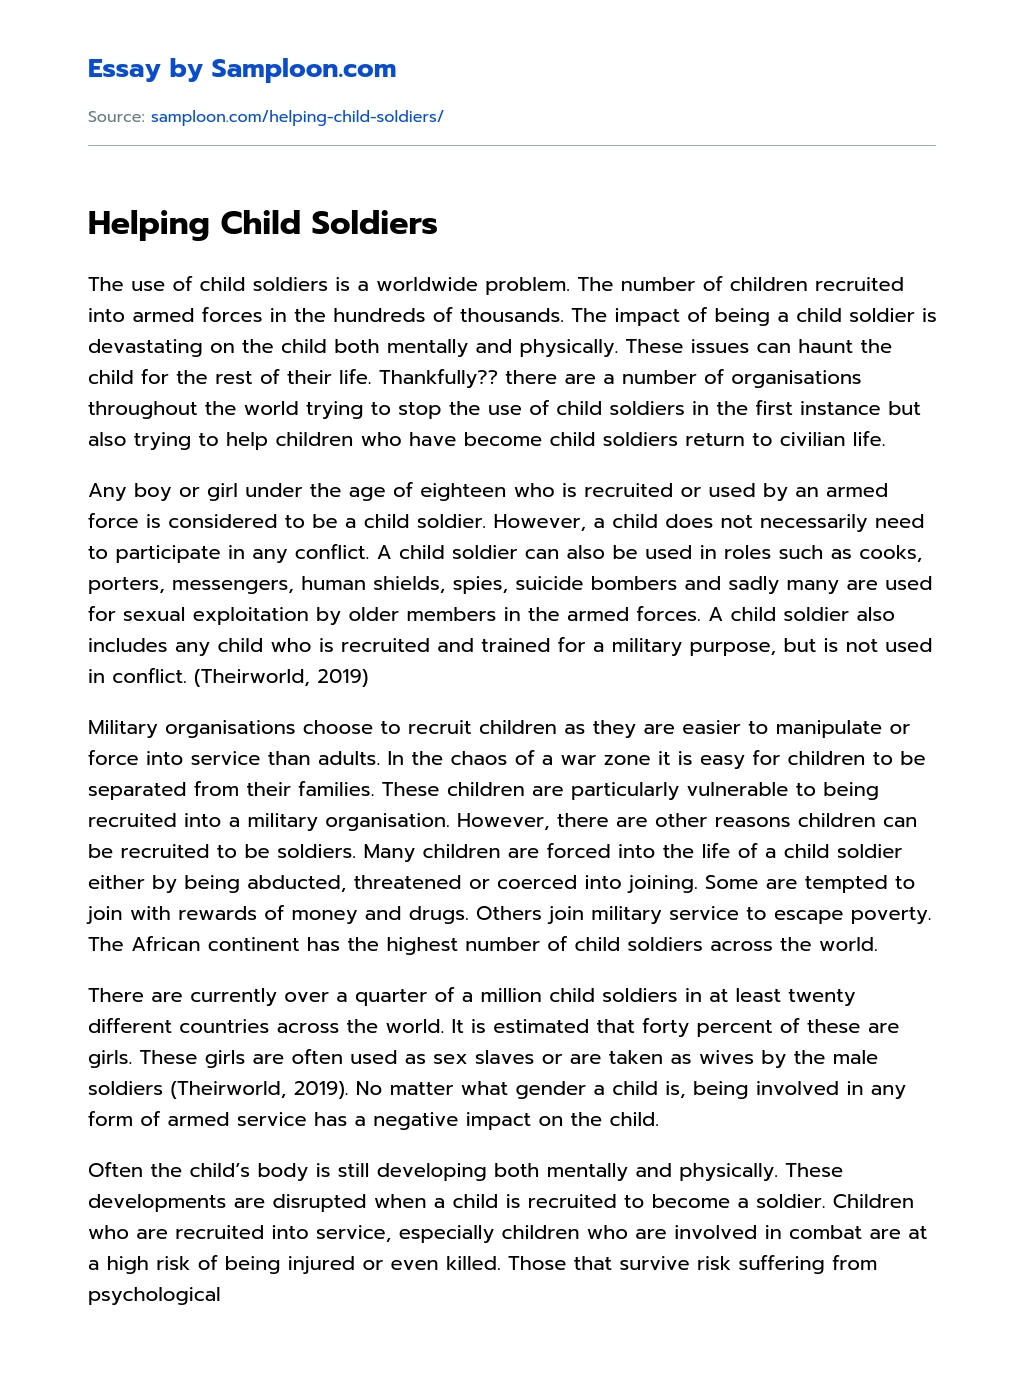 Helping Child Soldiers essay